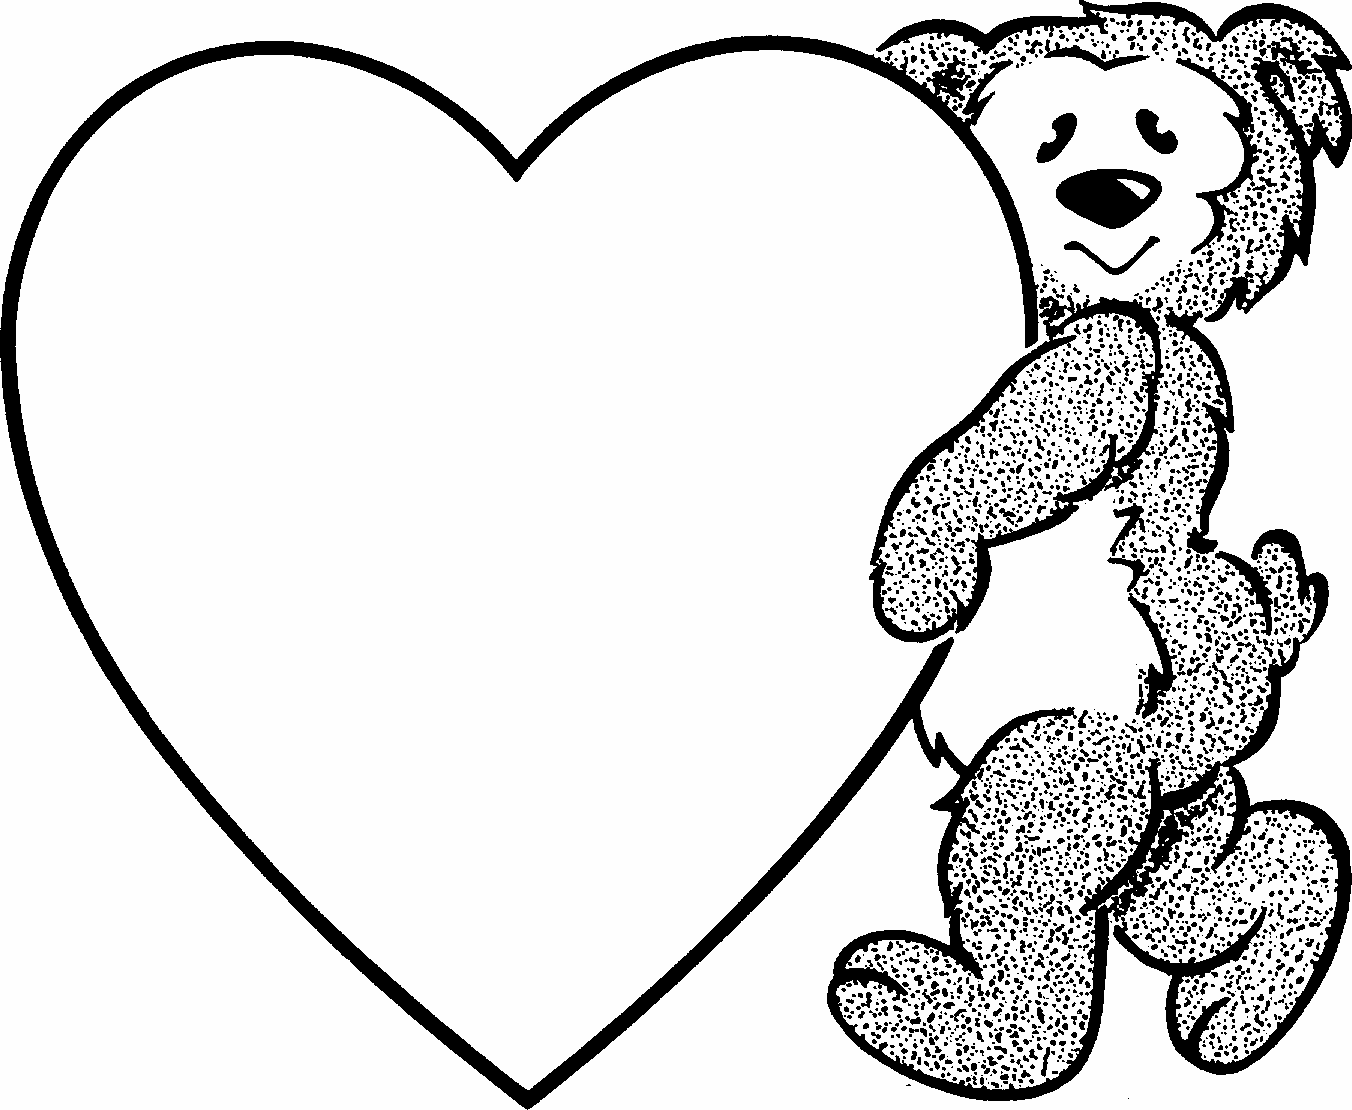 free Hearts Clip art. | Clipart Panda - Free Clipart Images